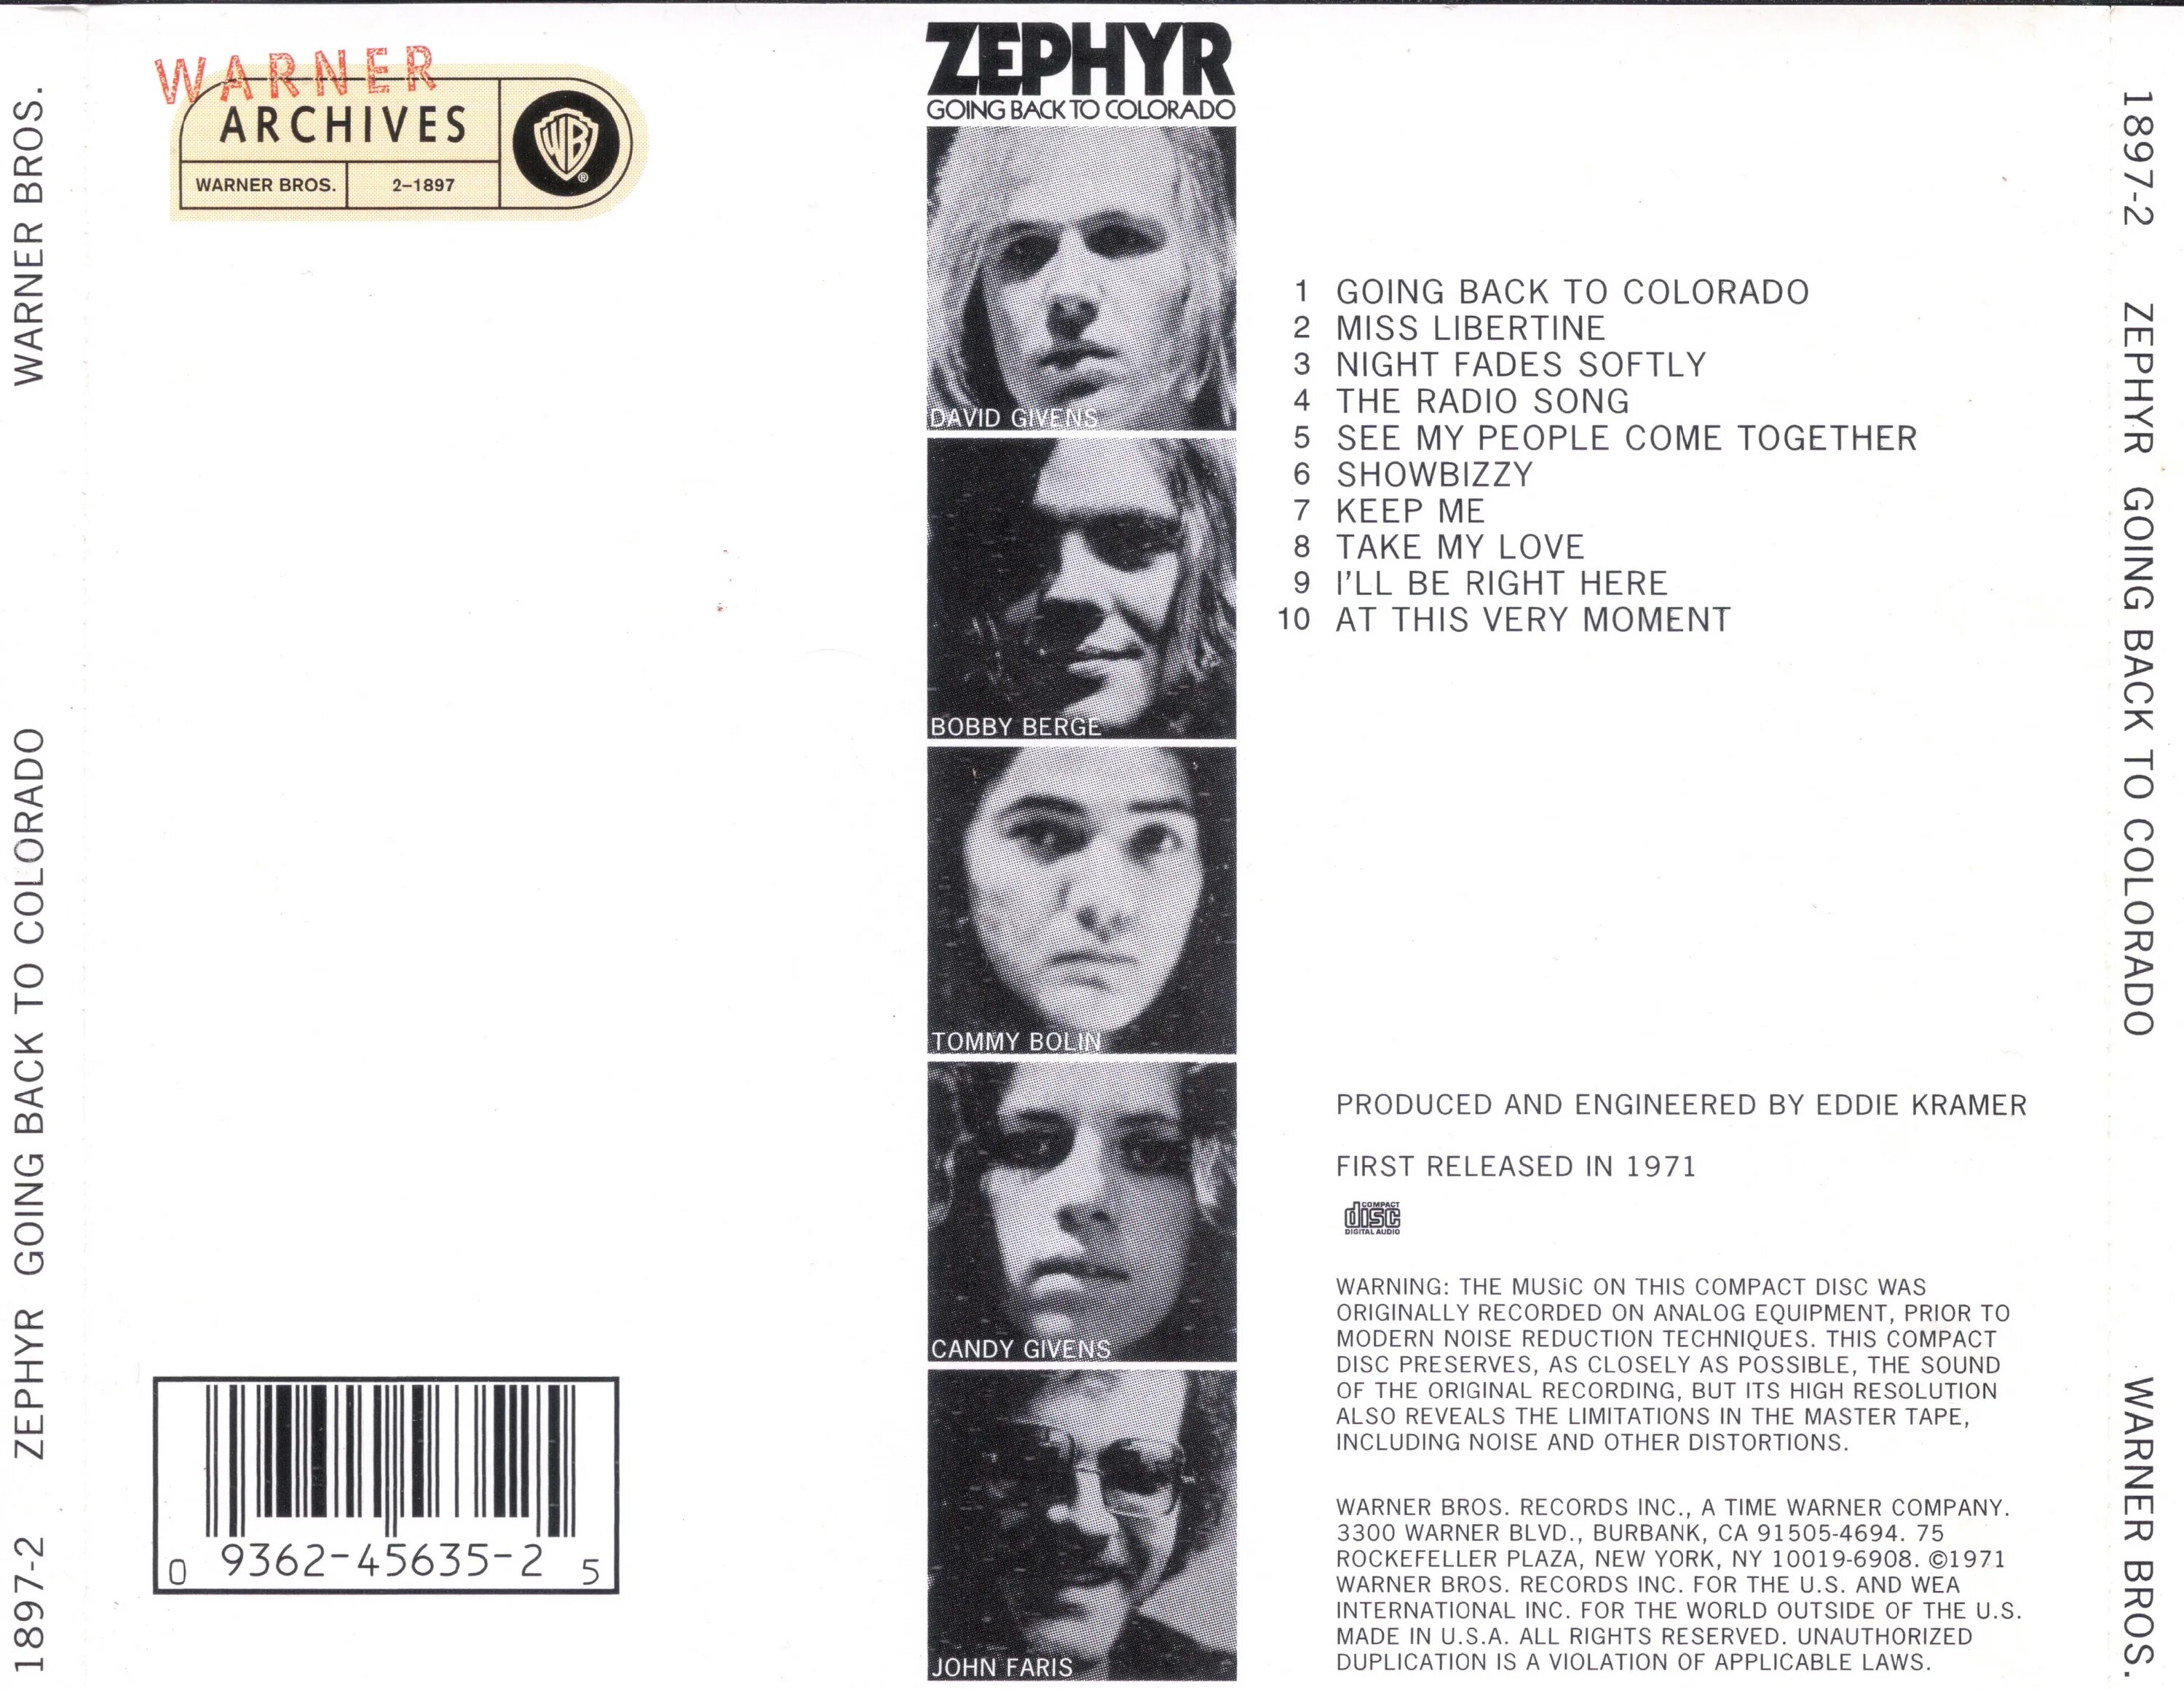 Zephyr 1971. Zephyr Band-going back to Colorado 1971. Zephyr - going back to Colorado. Going back.